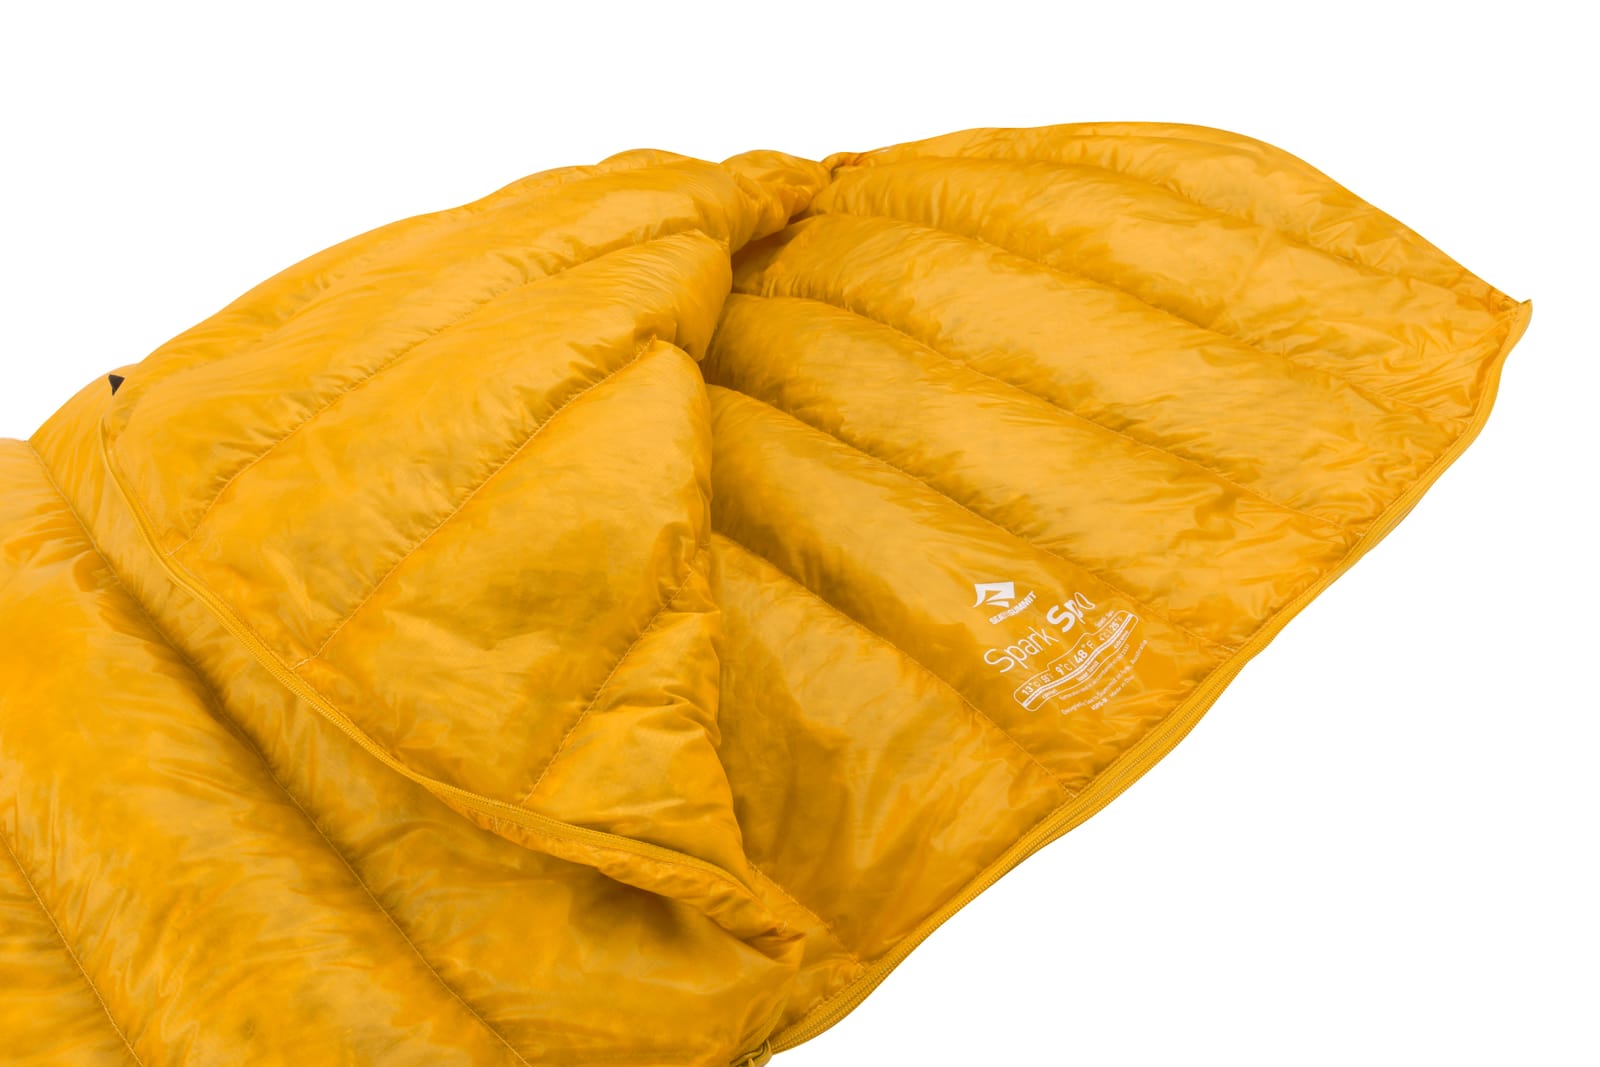 Sea To Summit Spark 0 Sleeping Bag (Unisex) 14°C - Clearance